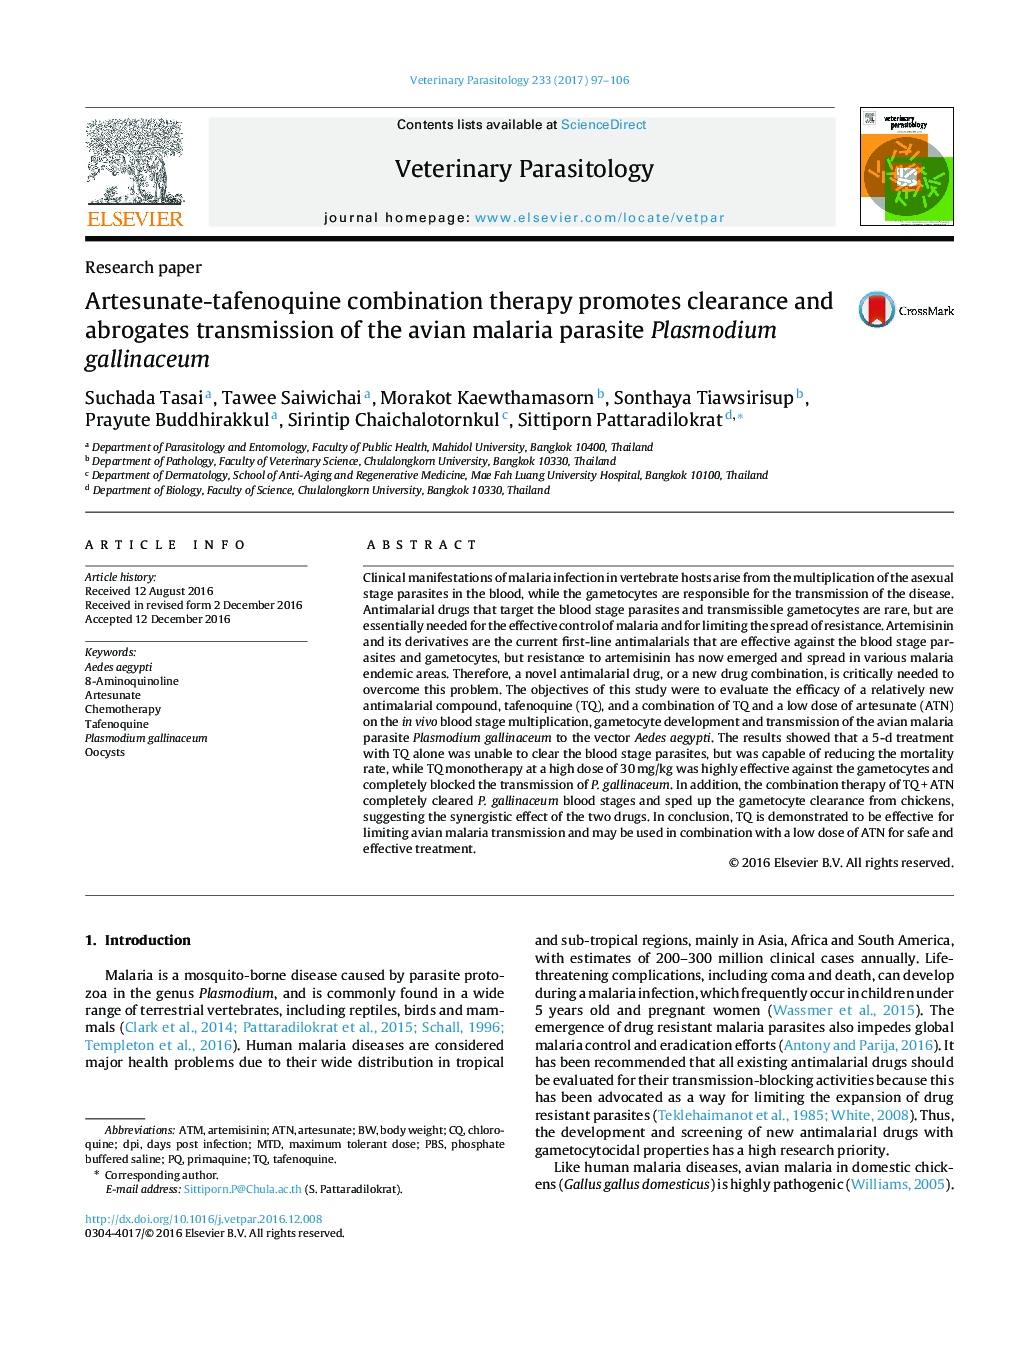 Artesunate-tafenoquine combination therapy promotes clearance and abrogates transmission of the avian malaria parasite Plasmodium gallinaceum